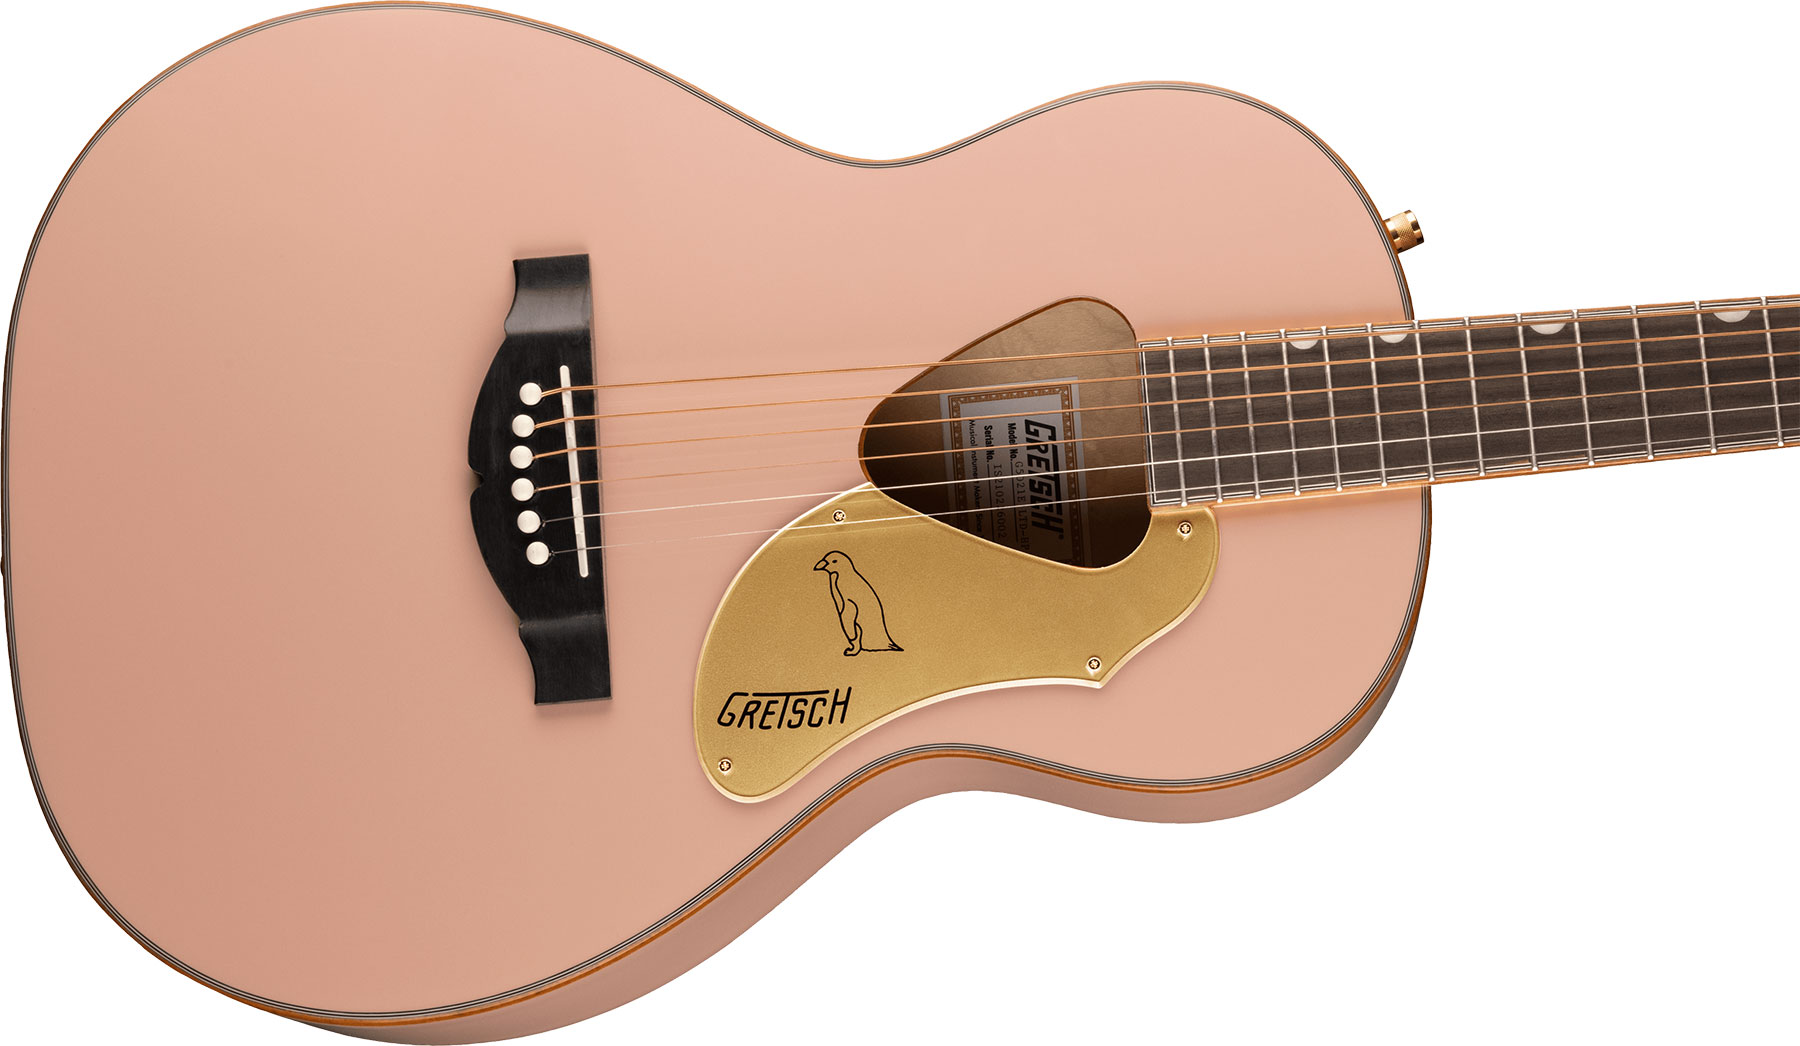 Gretsch G5021e Rancher Penguin Parlor Epicea Erable Lau - Shell Pink - Electro acoustic guitar - Variation 2